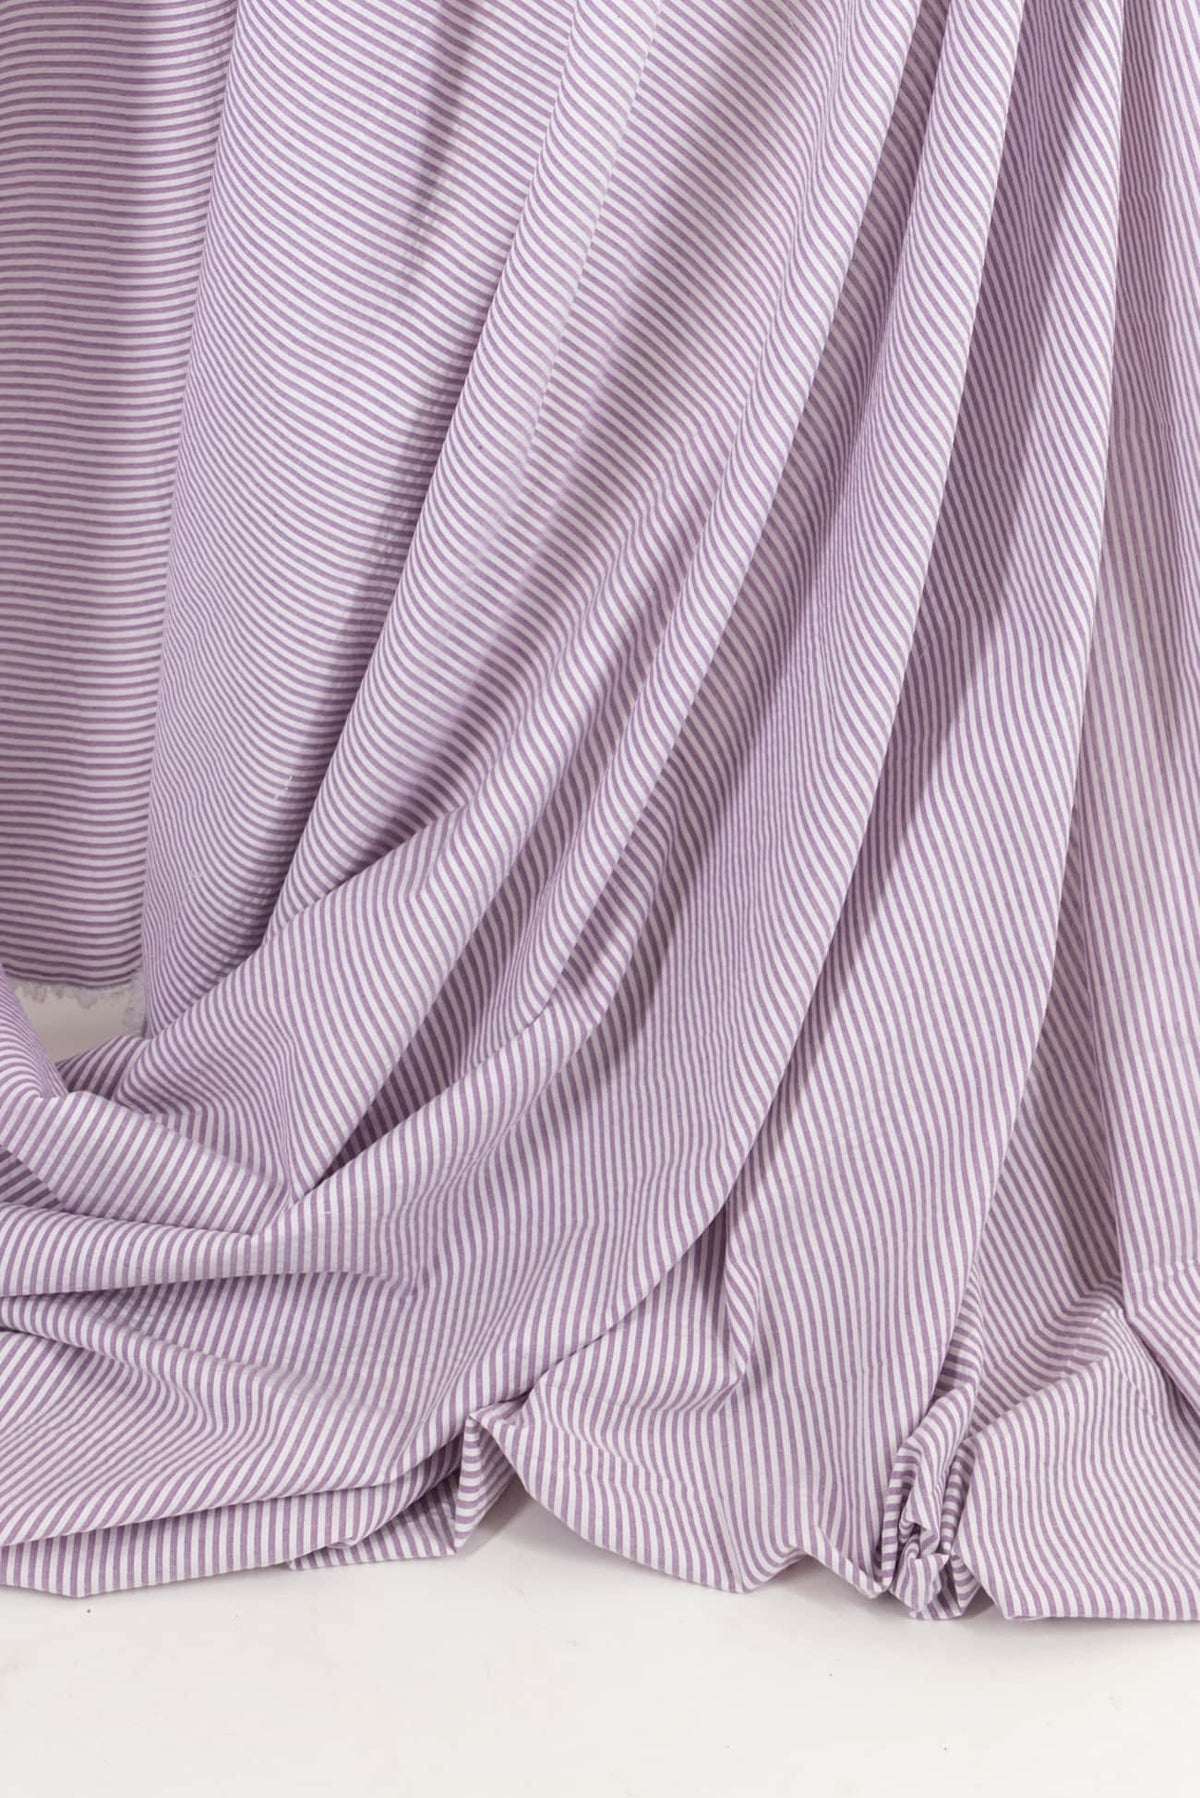 Iced Lavender Italian Cotton Seersucker Stripe Woven